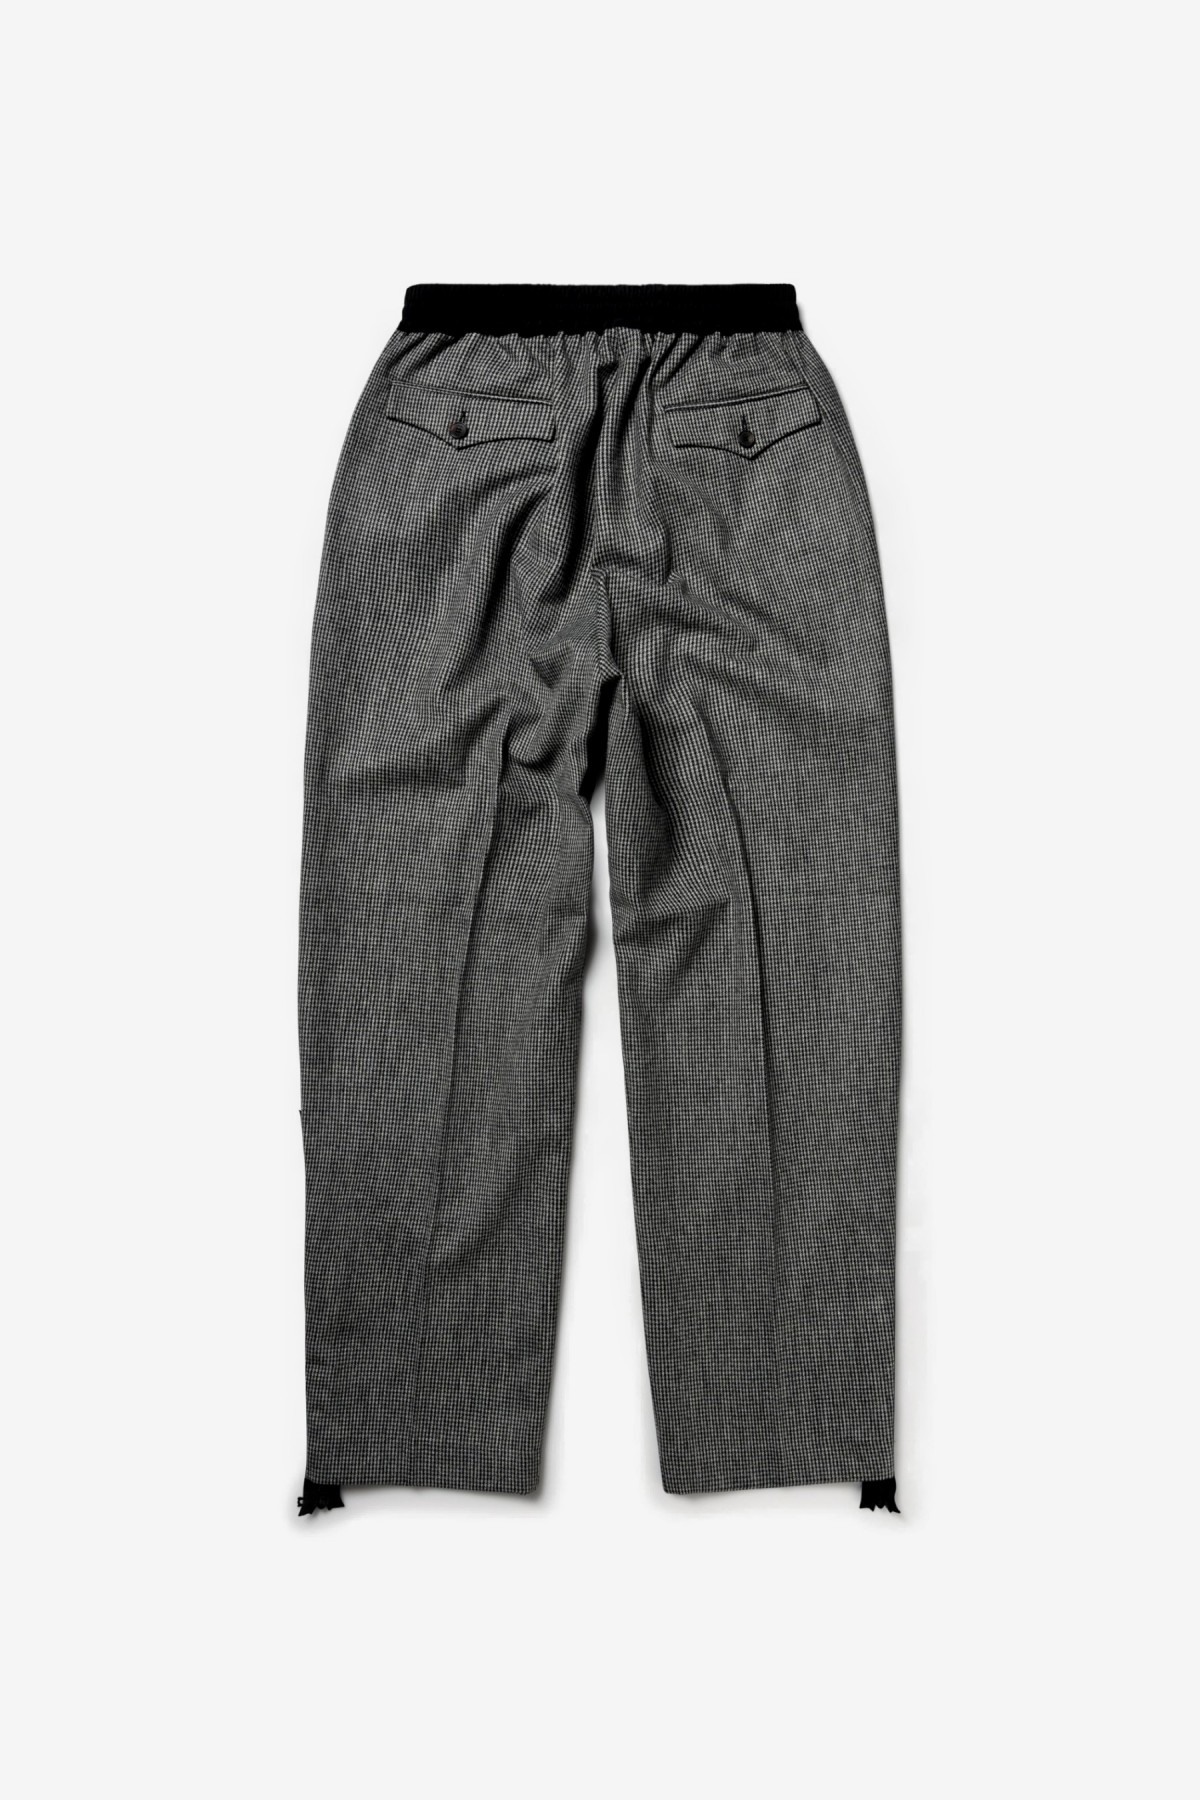 Aries Arise Zip Tailored Slacker Pant in Grey